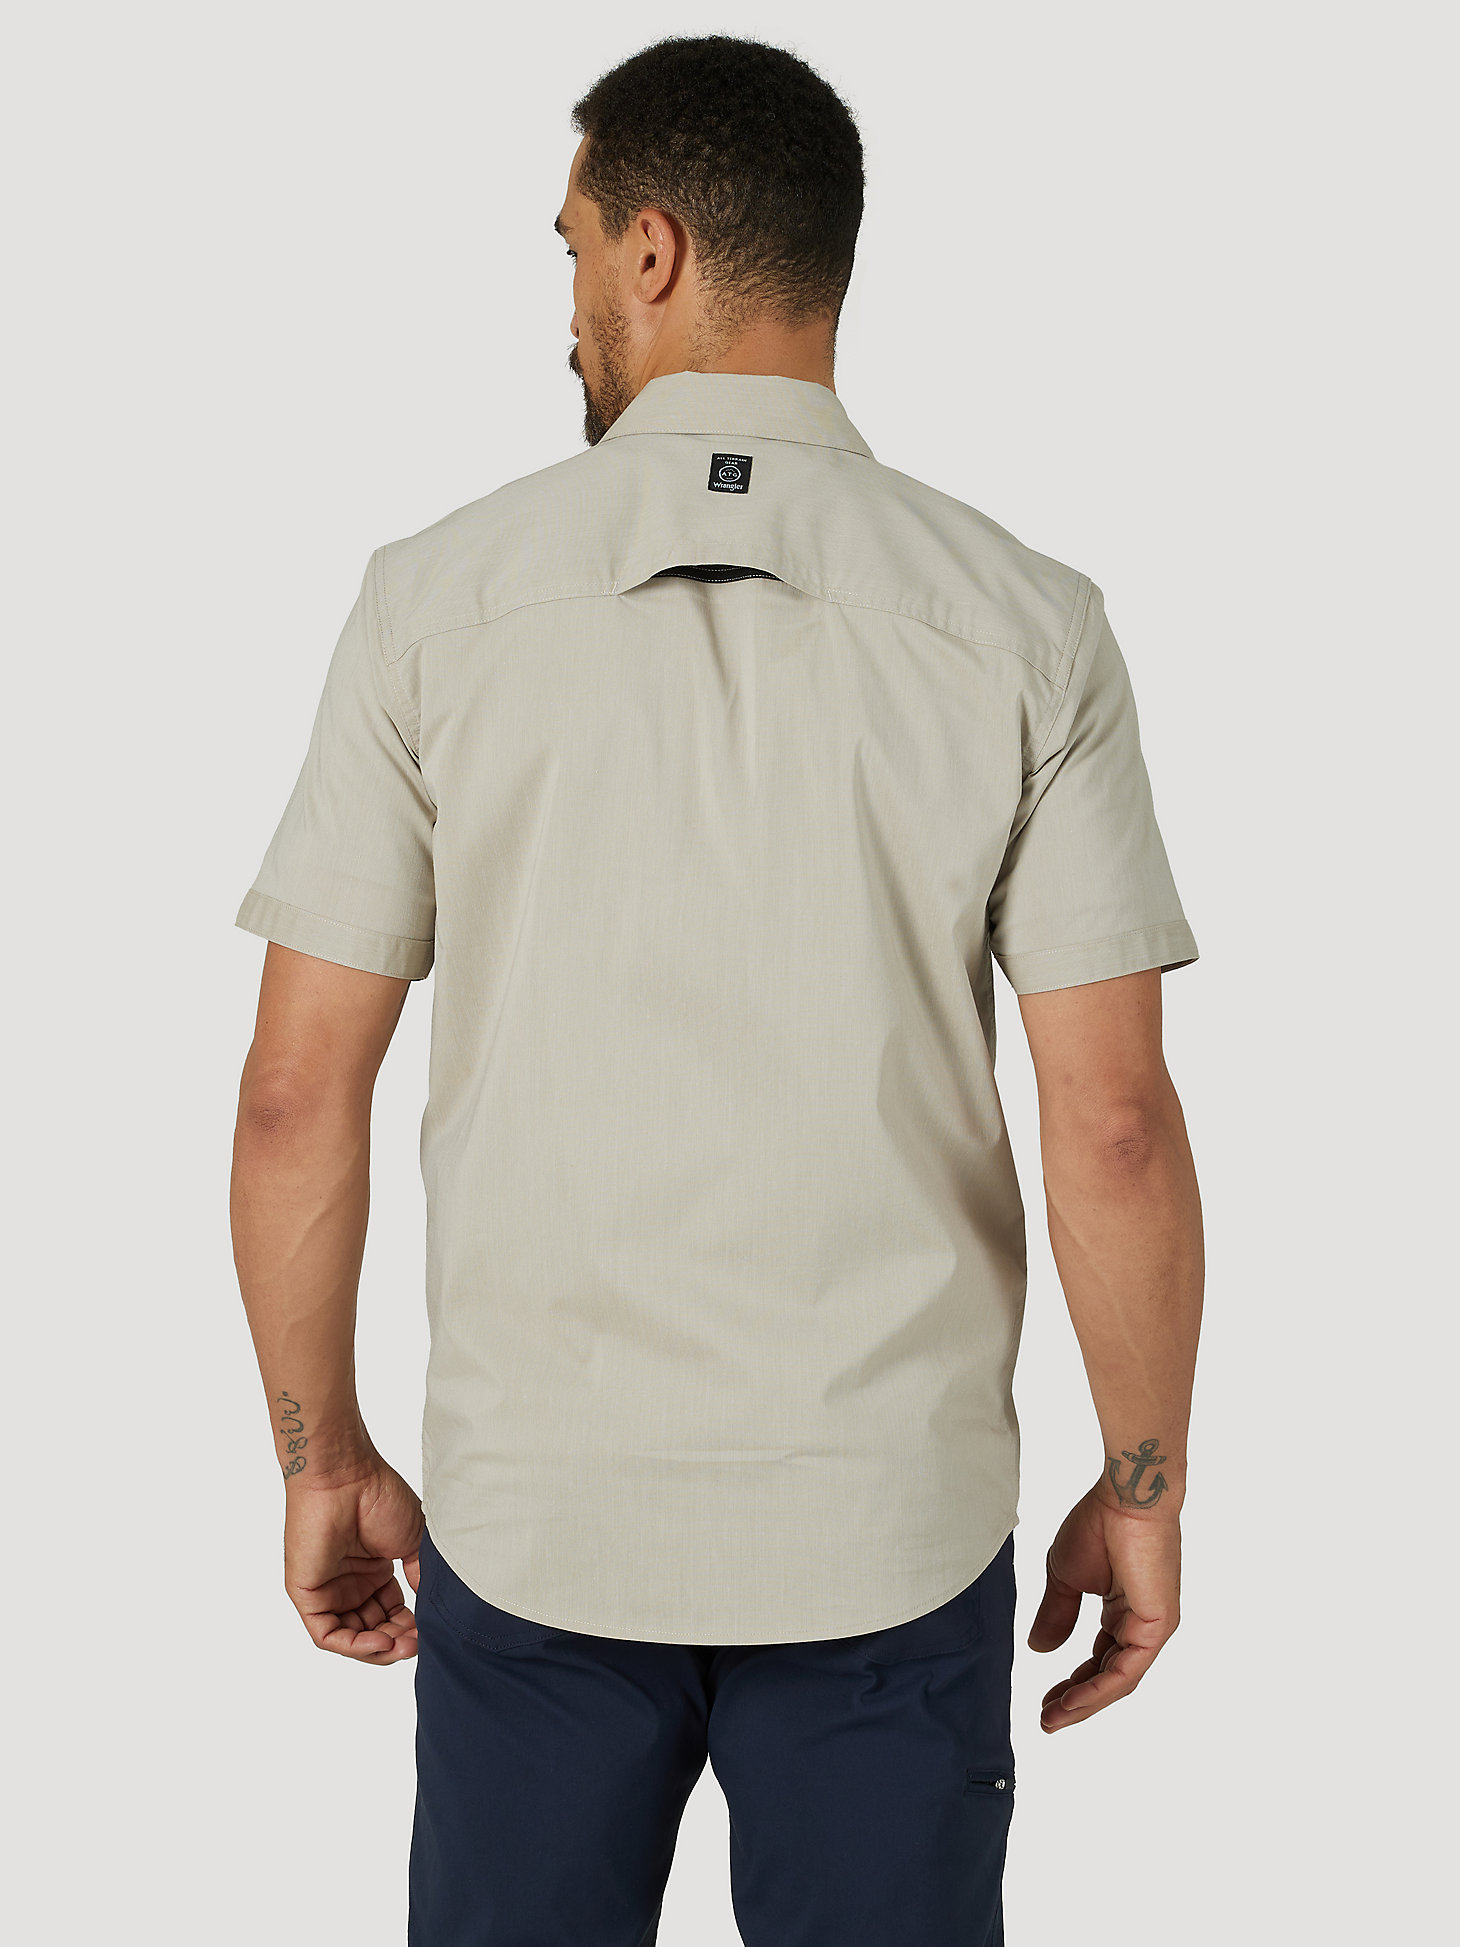 Short Sleeve Zip Pocket Shirt in Aluminum alternative view 2